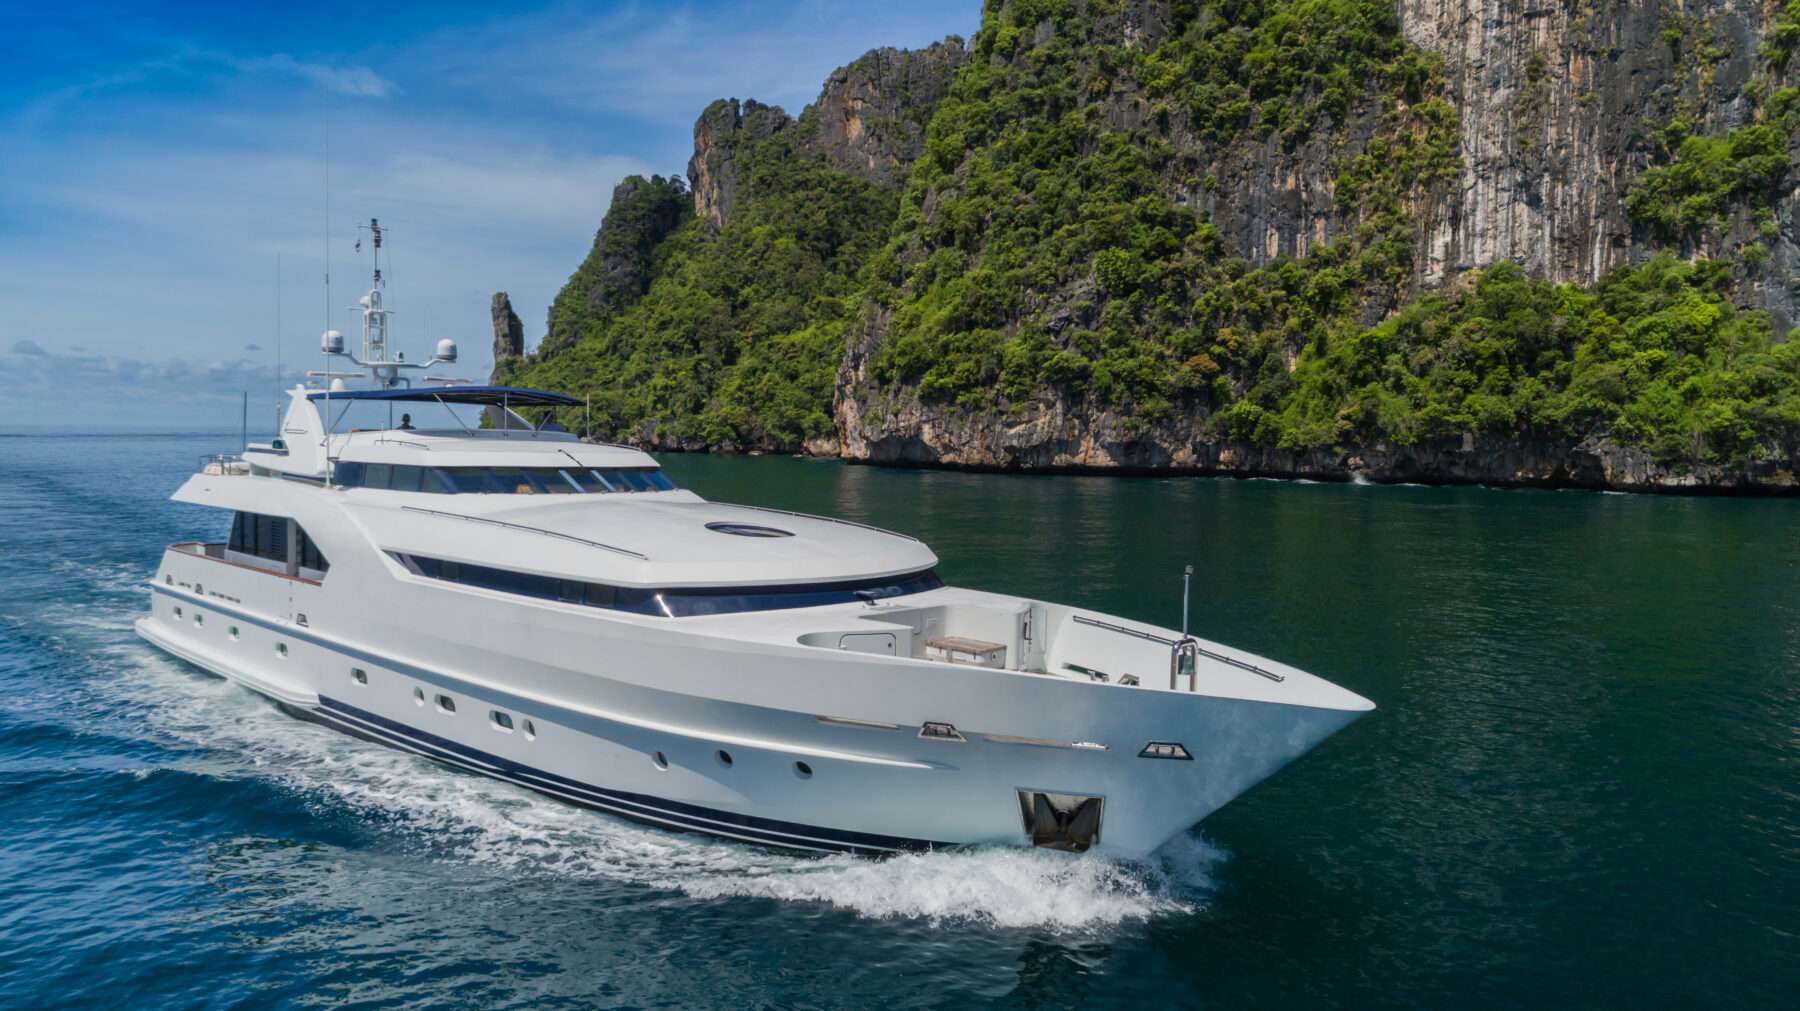 Xanadu - Yacht Charter Koh Samui & Boat hire in SE Asia 1